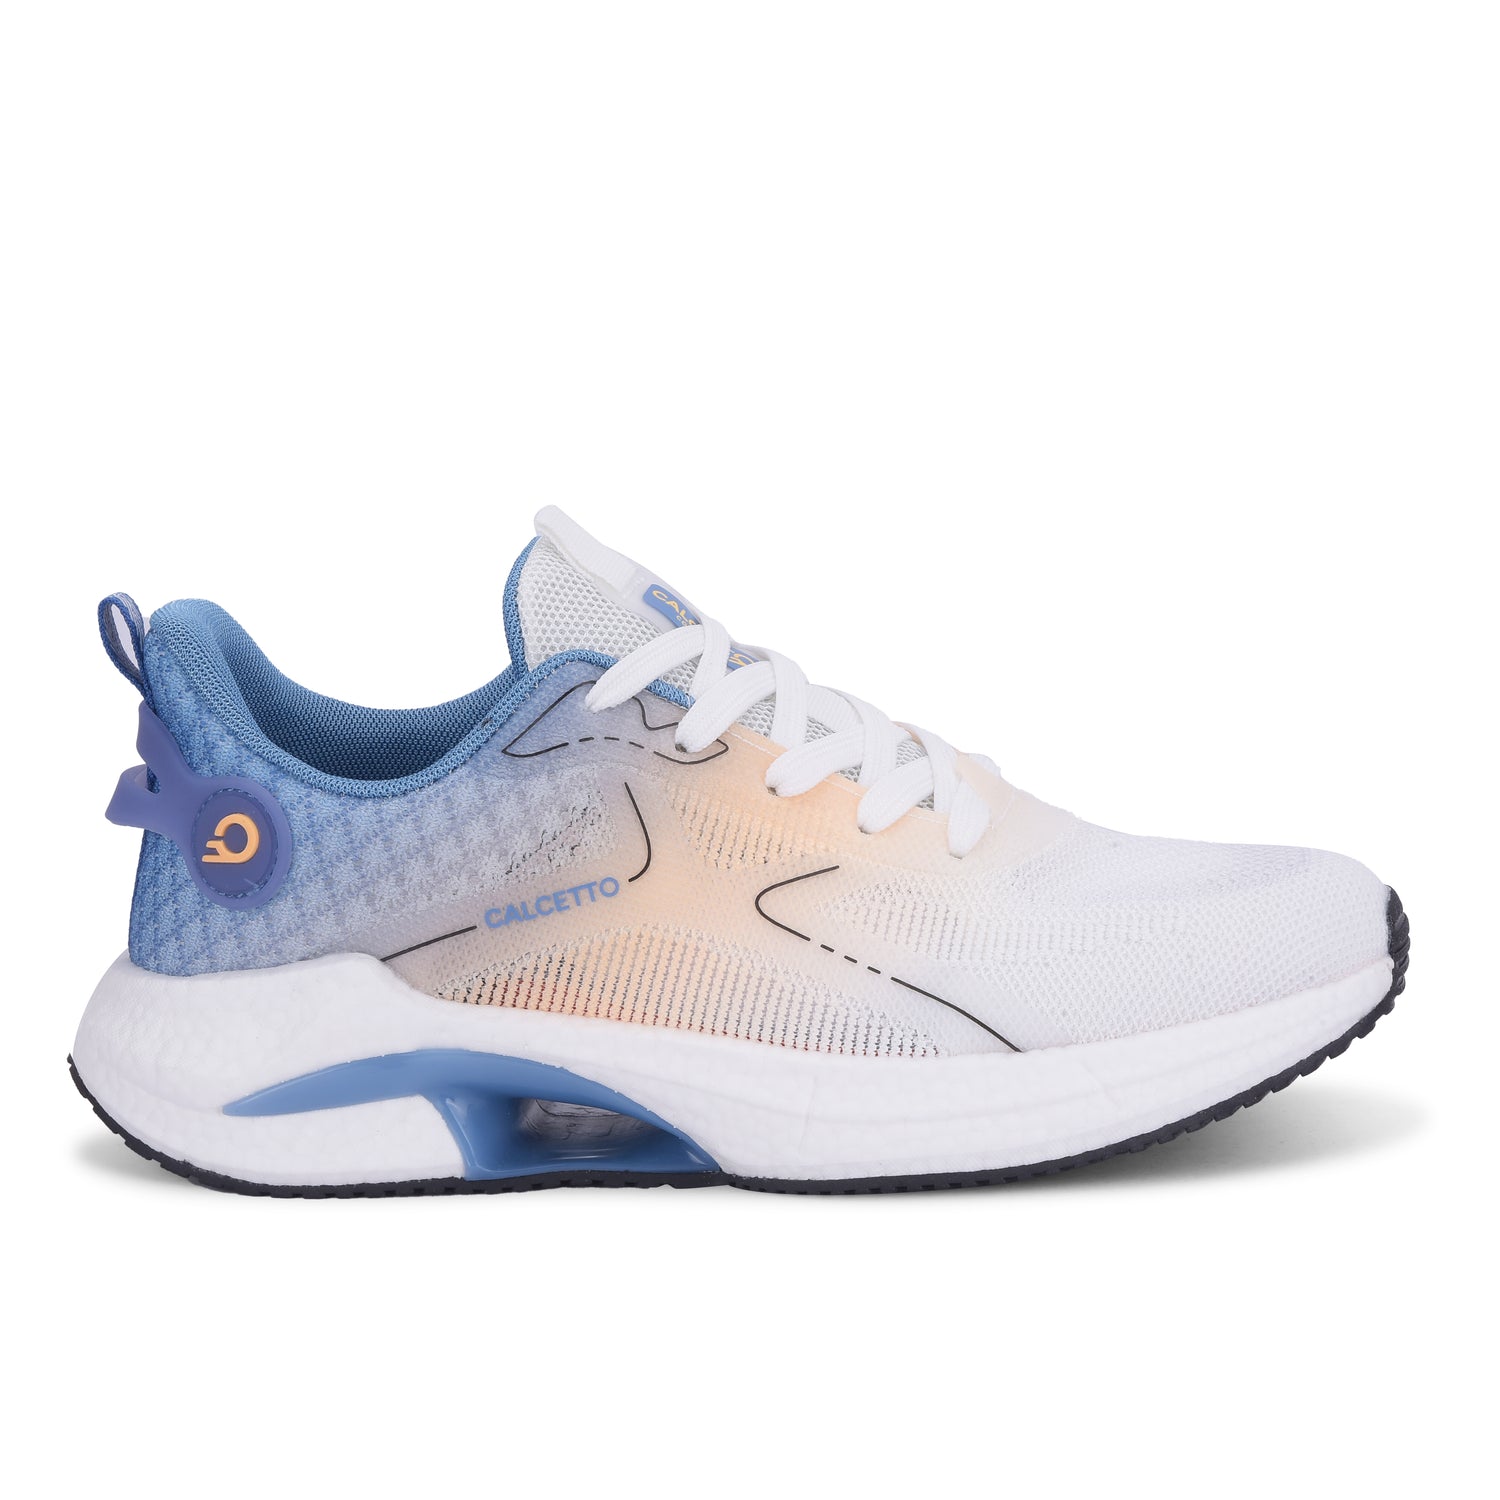 Calcetto CLT-1014 White Blue Casual Shoe For Men